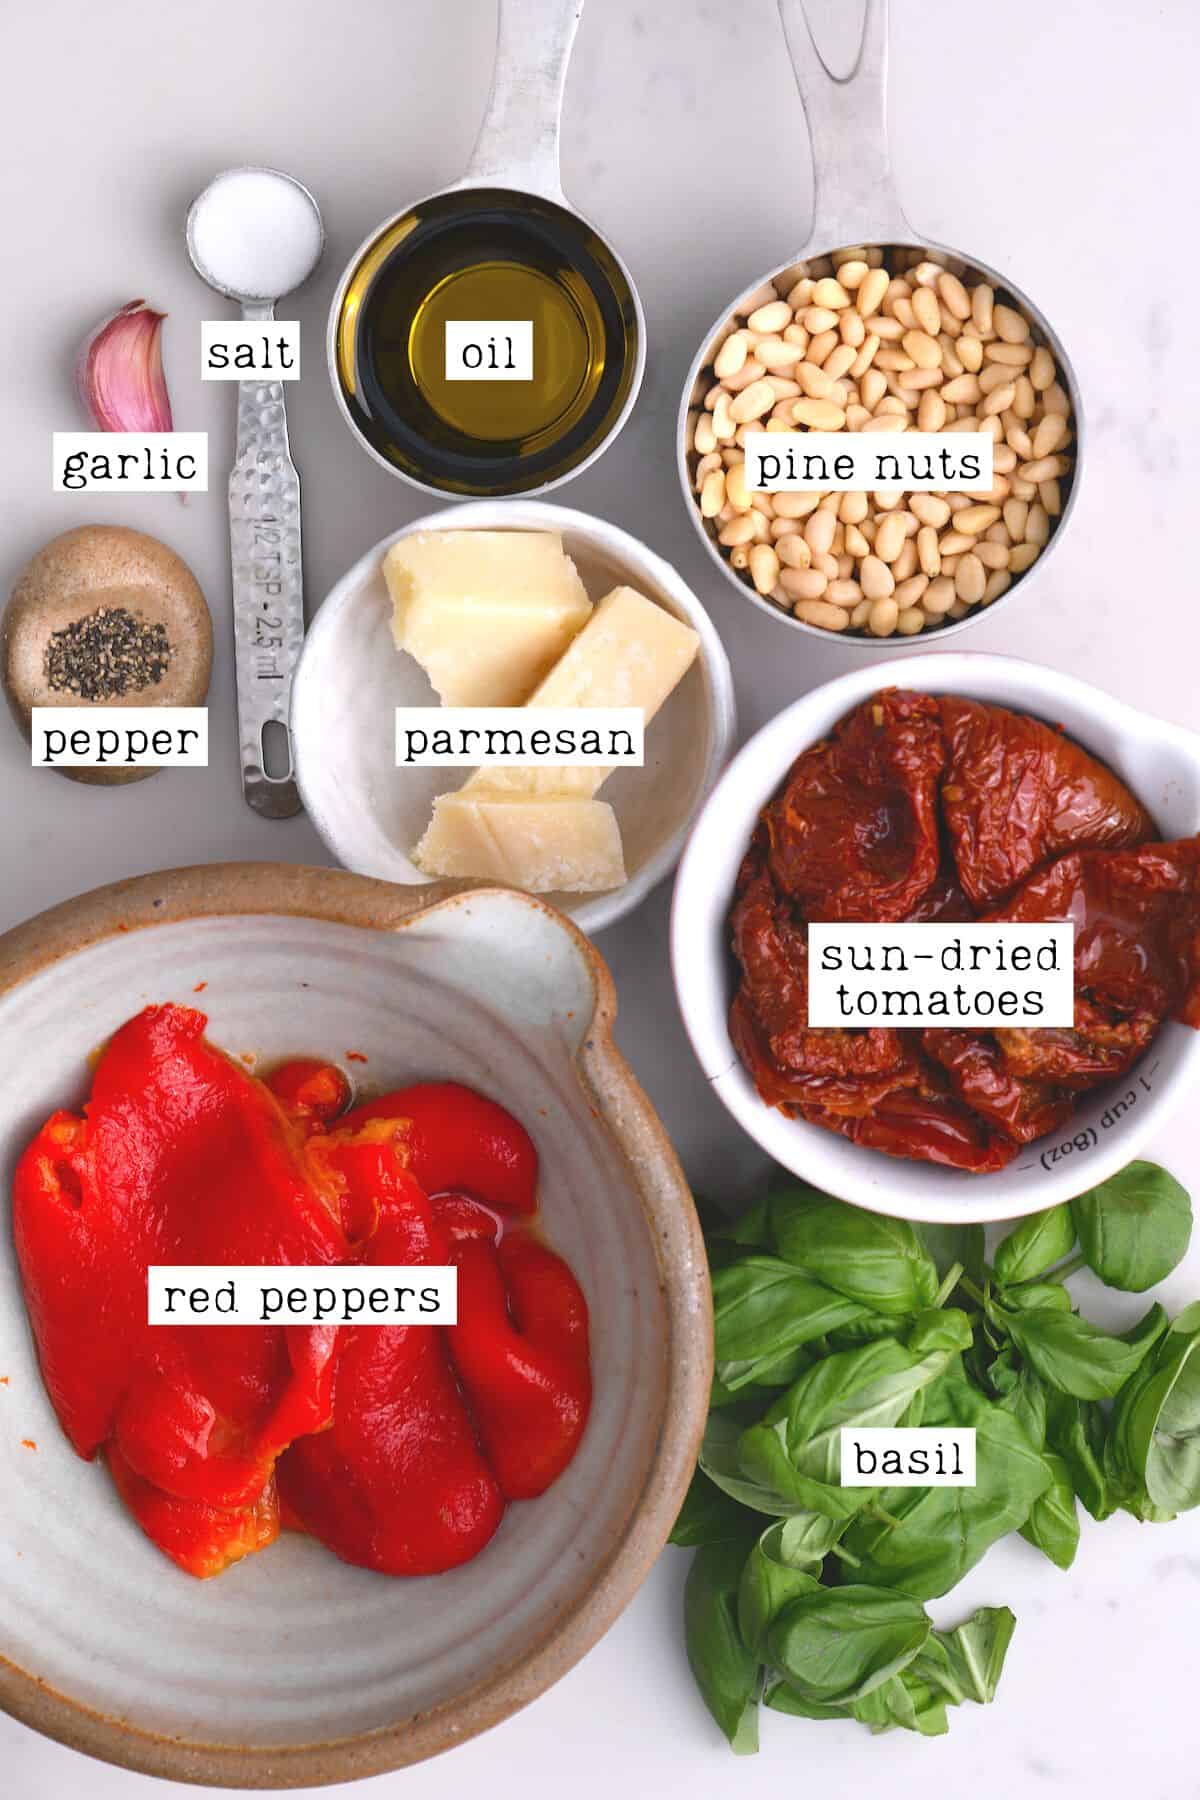 Ingredients for red pesto (pesto rosso)